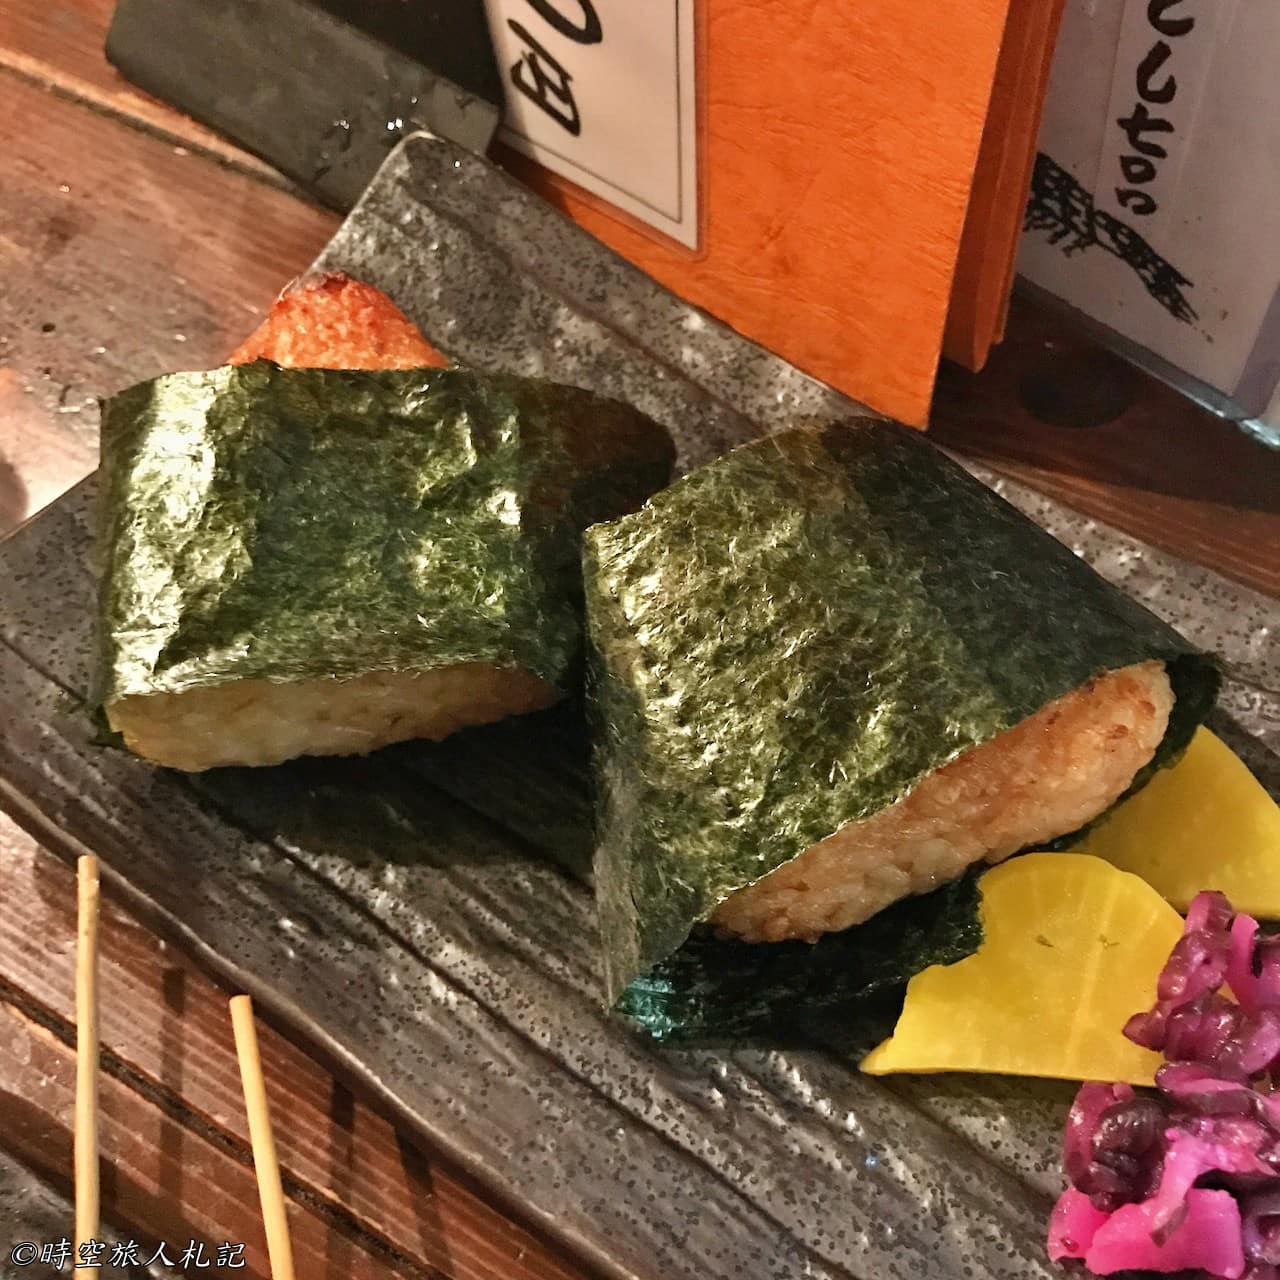 Kyoto Food, Kyoto Snacks 18